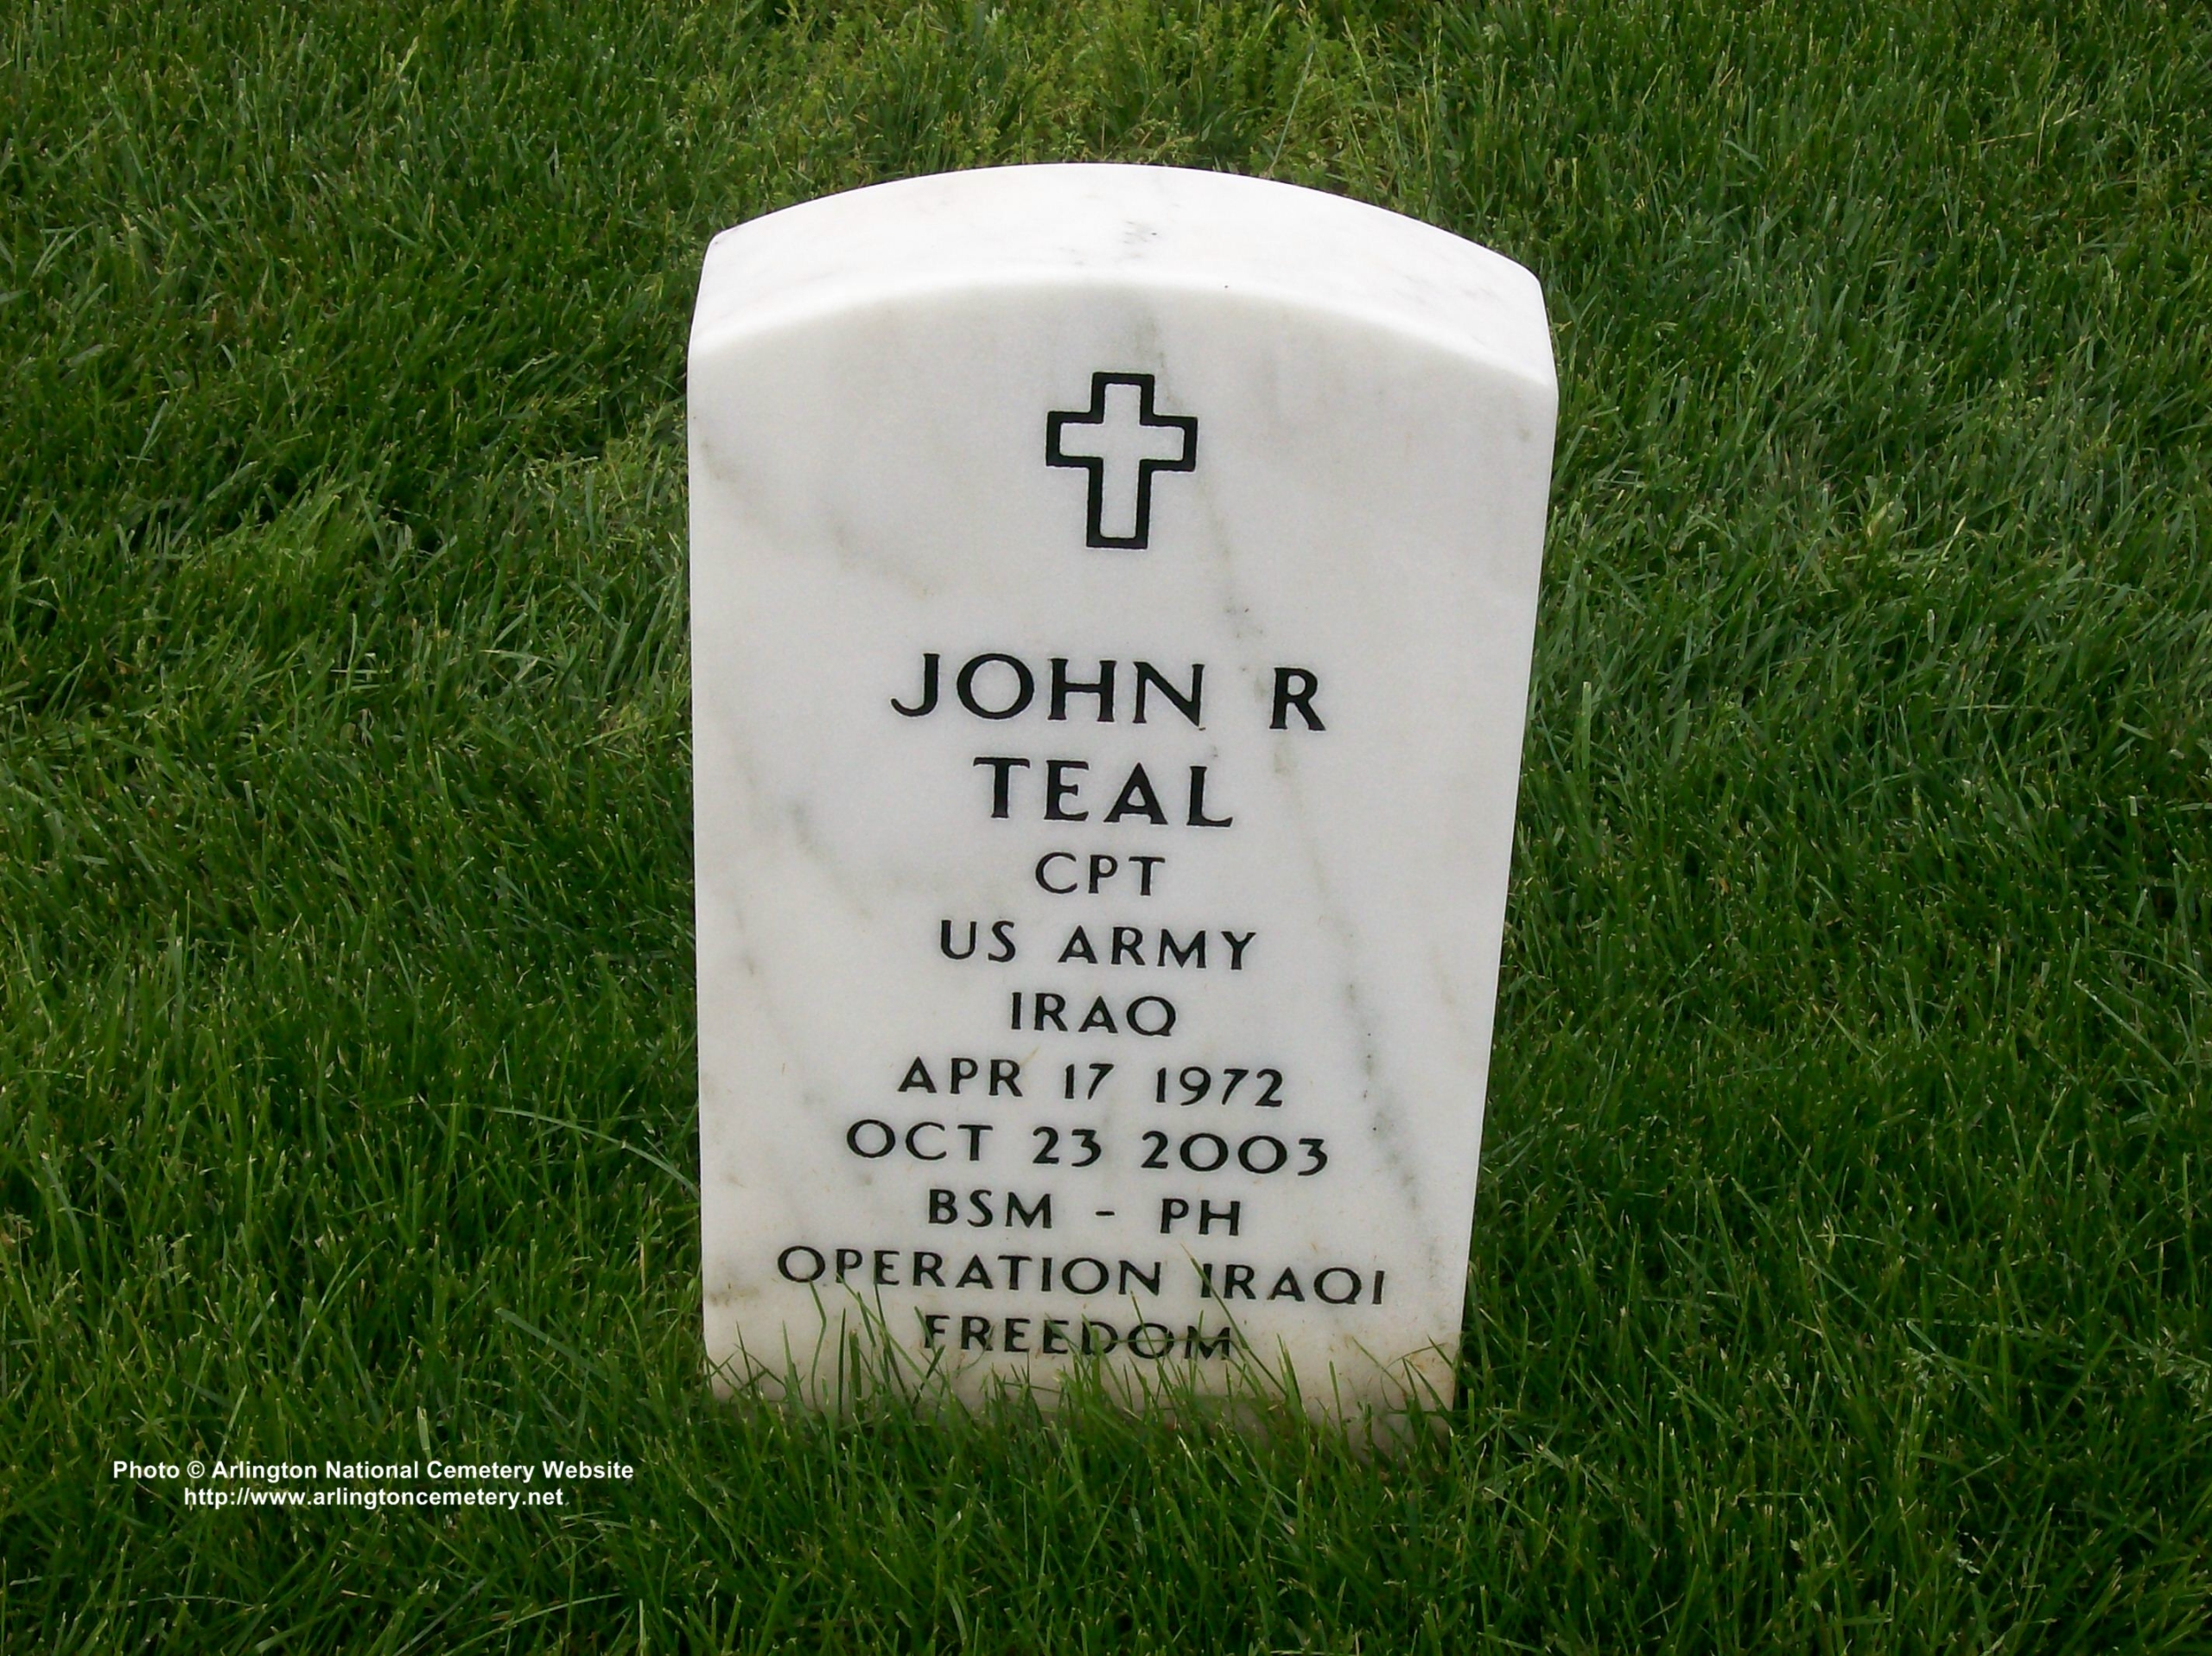 jrteal-gravesite-photo-may-2008-001